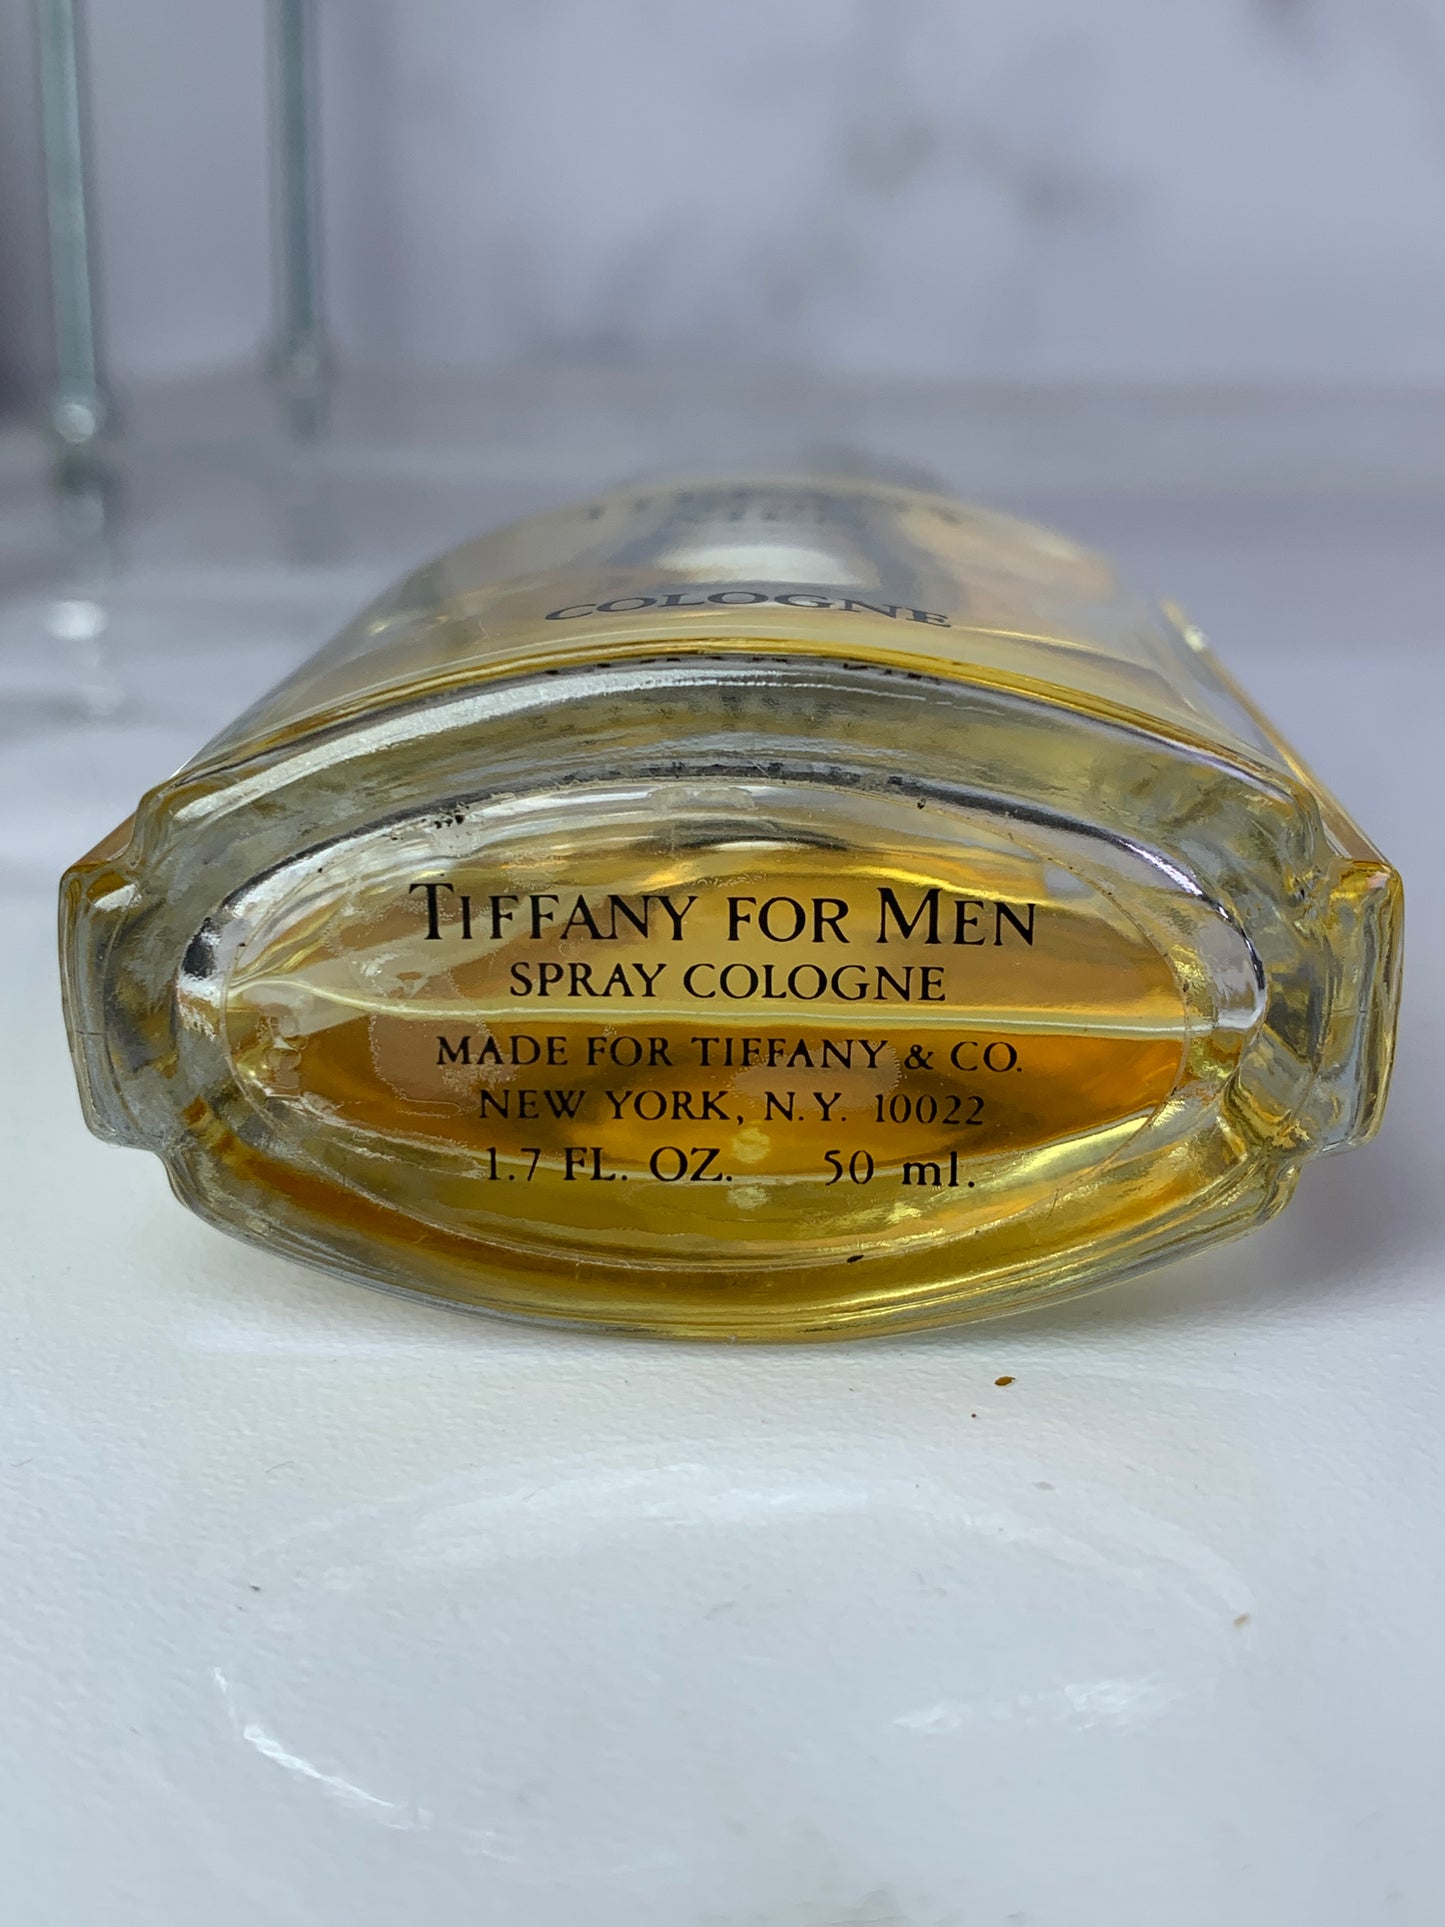 Rare Tiffany for Men Eau de Cologne EDC 50ml 1.7 oz  - 170424